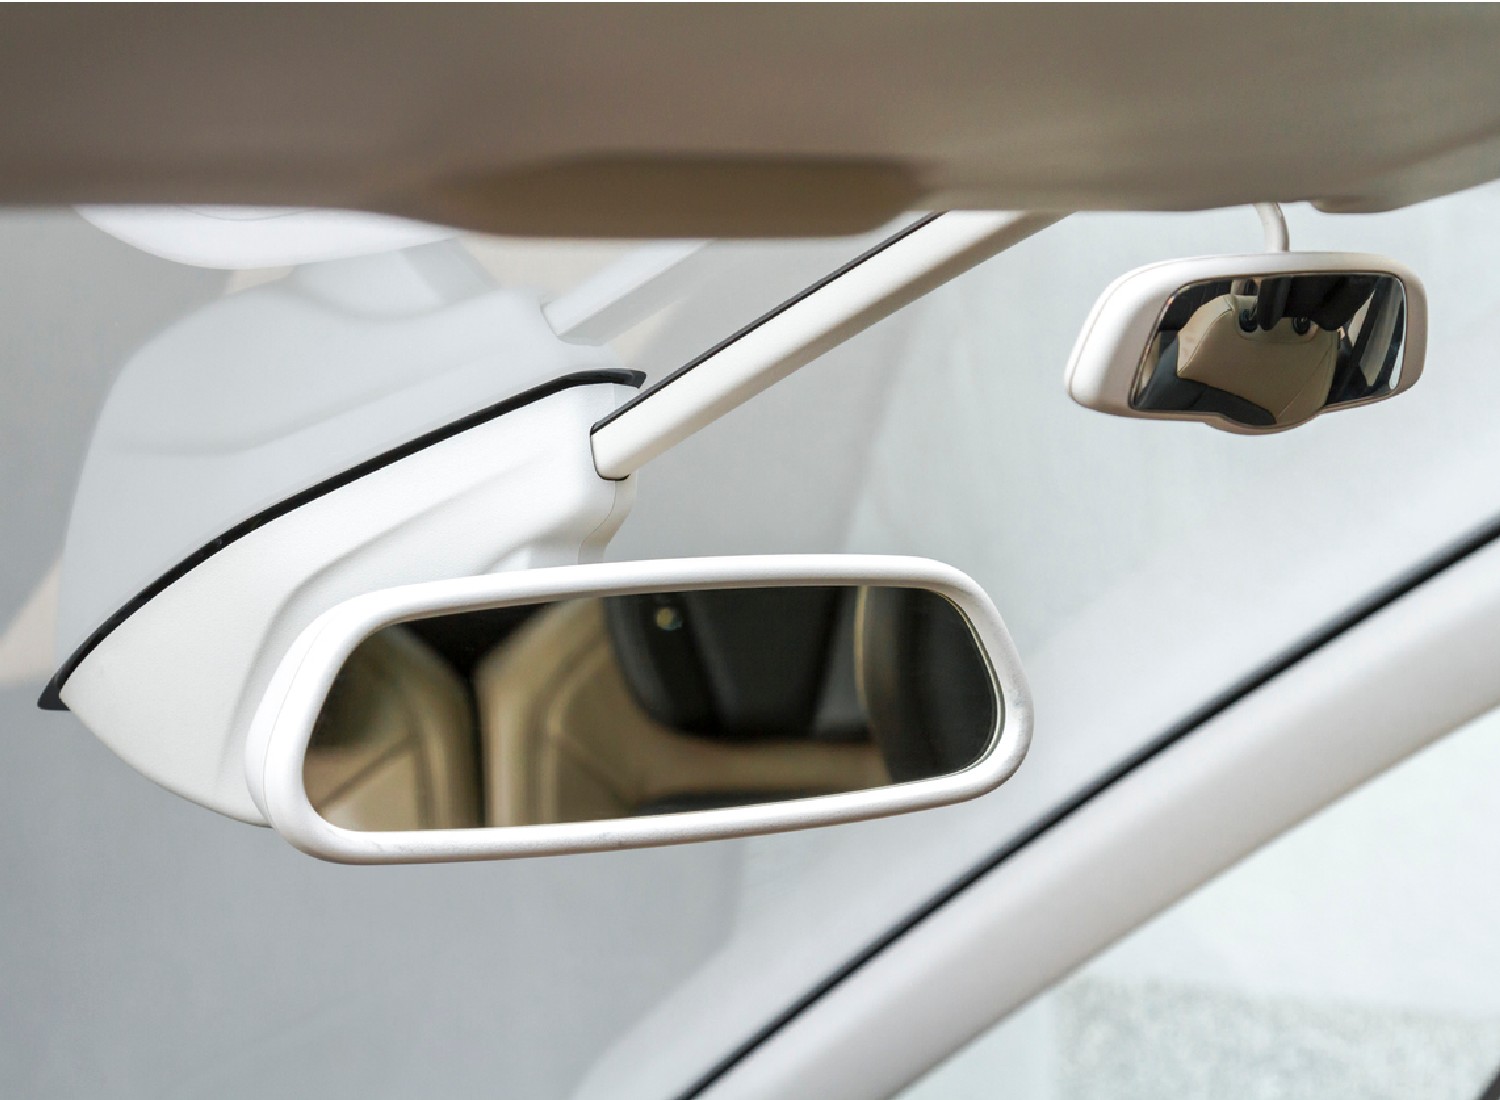  Utopicar Blind Spot Car Mirror - Convex Blindspot